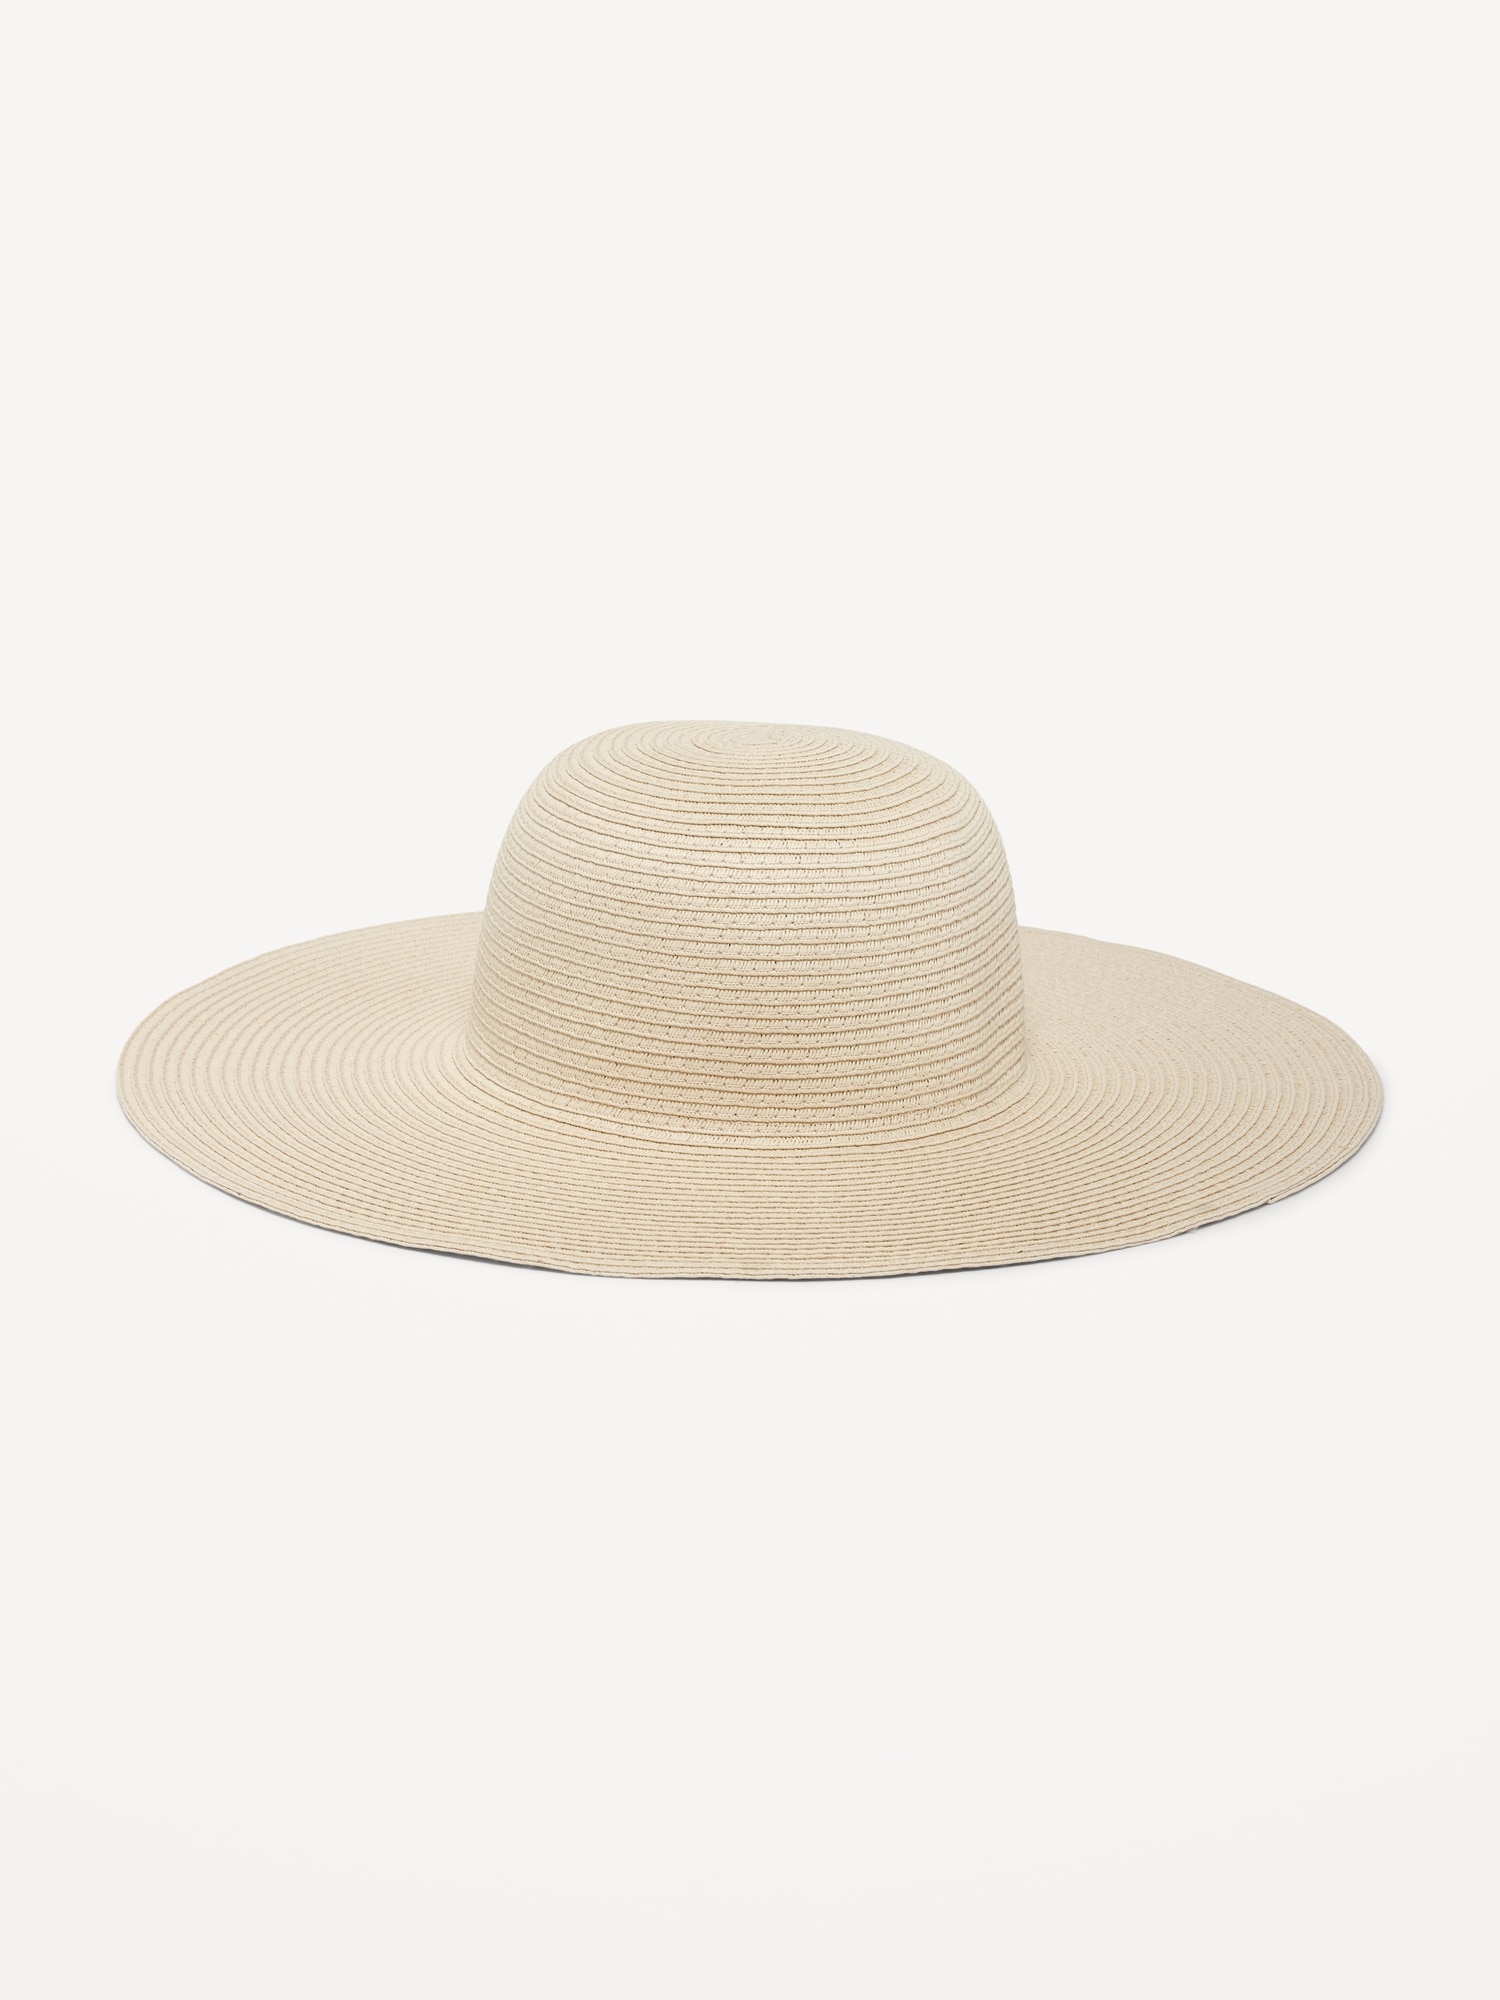 Womens Straw Hats, Straw Sun Hats for Women